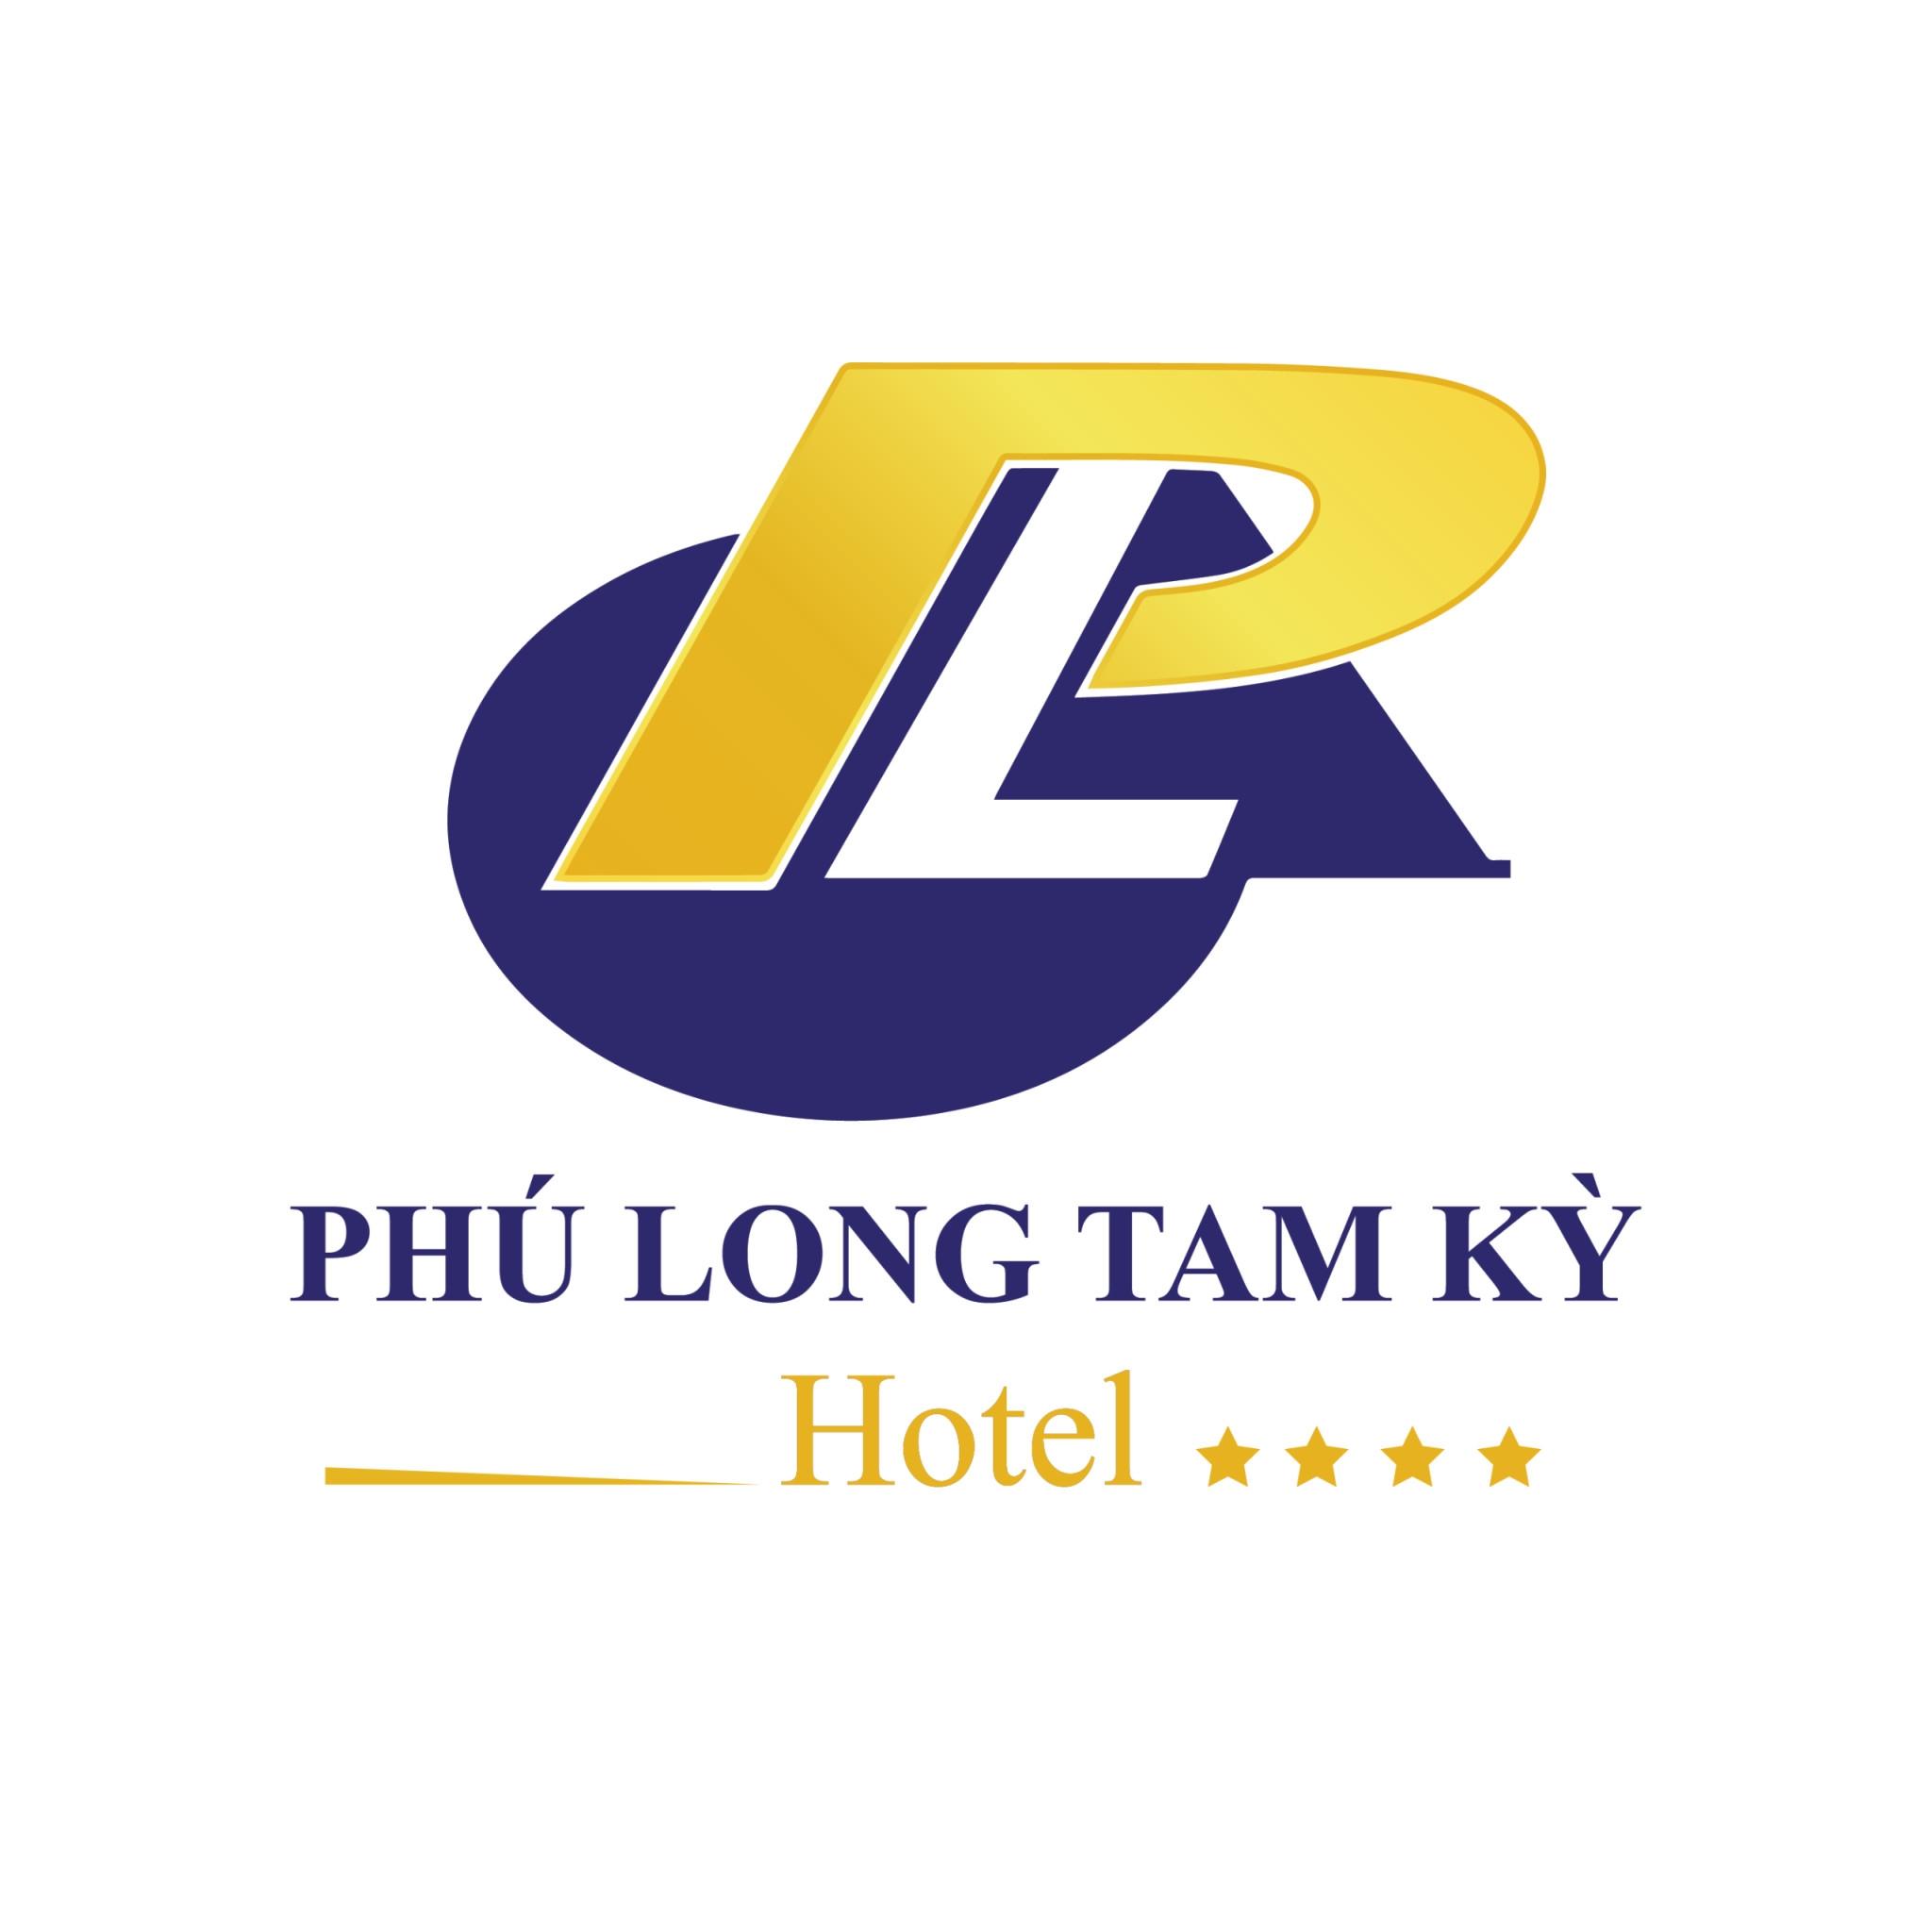 Phú Long Tam Kỳ Hotel  